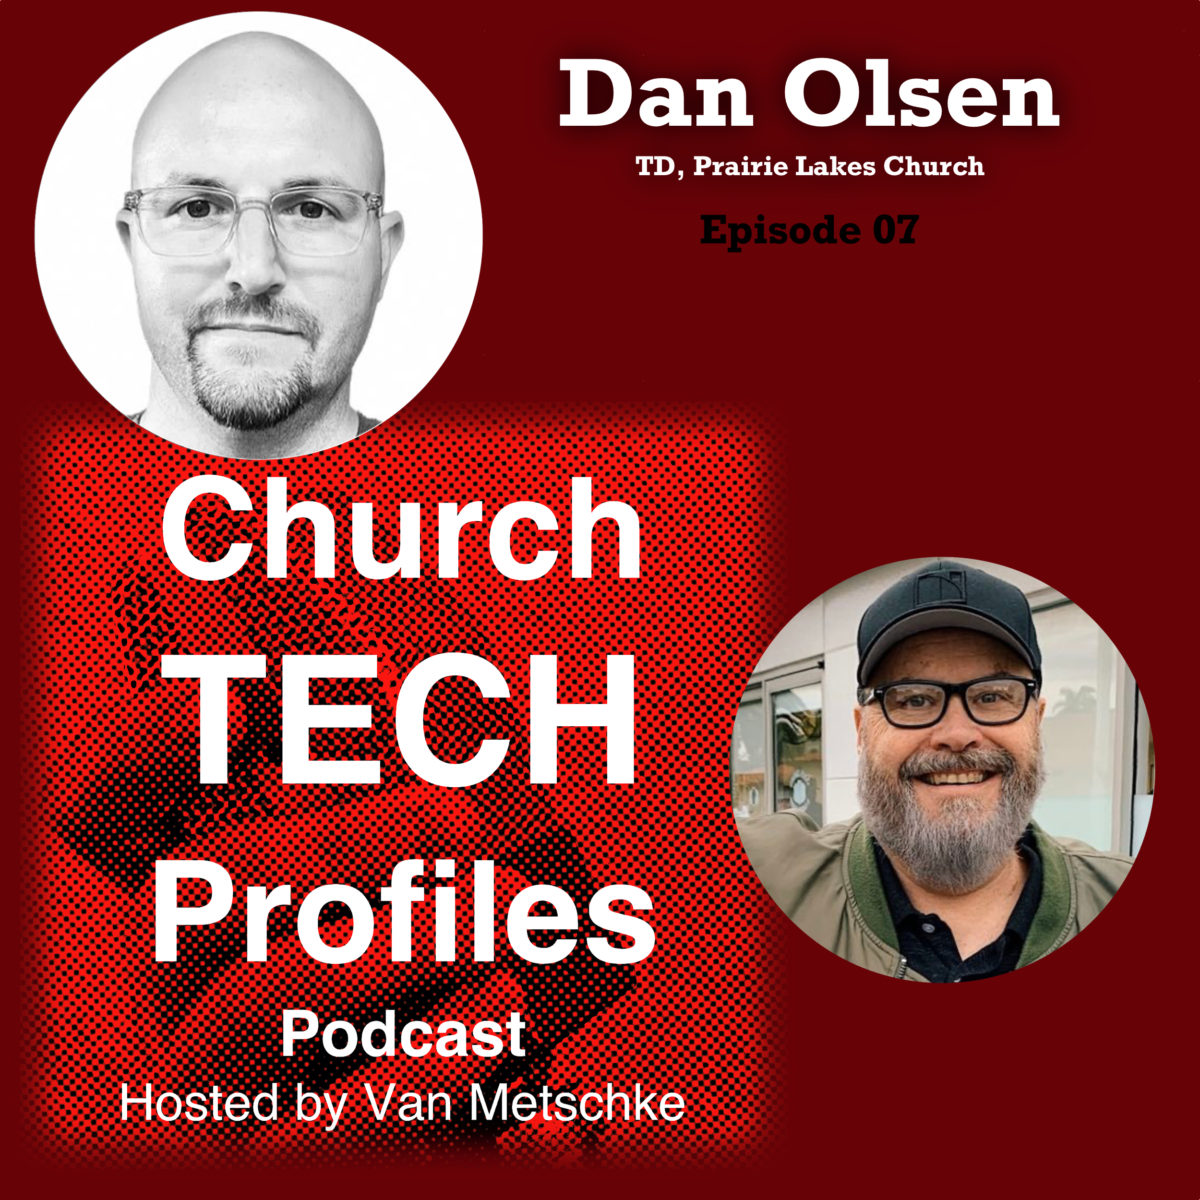 Church Tech Profiles Podcast Episode 07: Dan Olsen